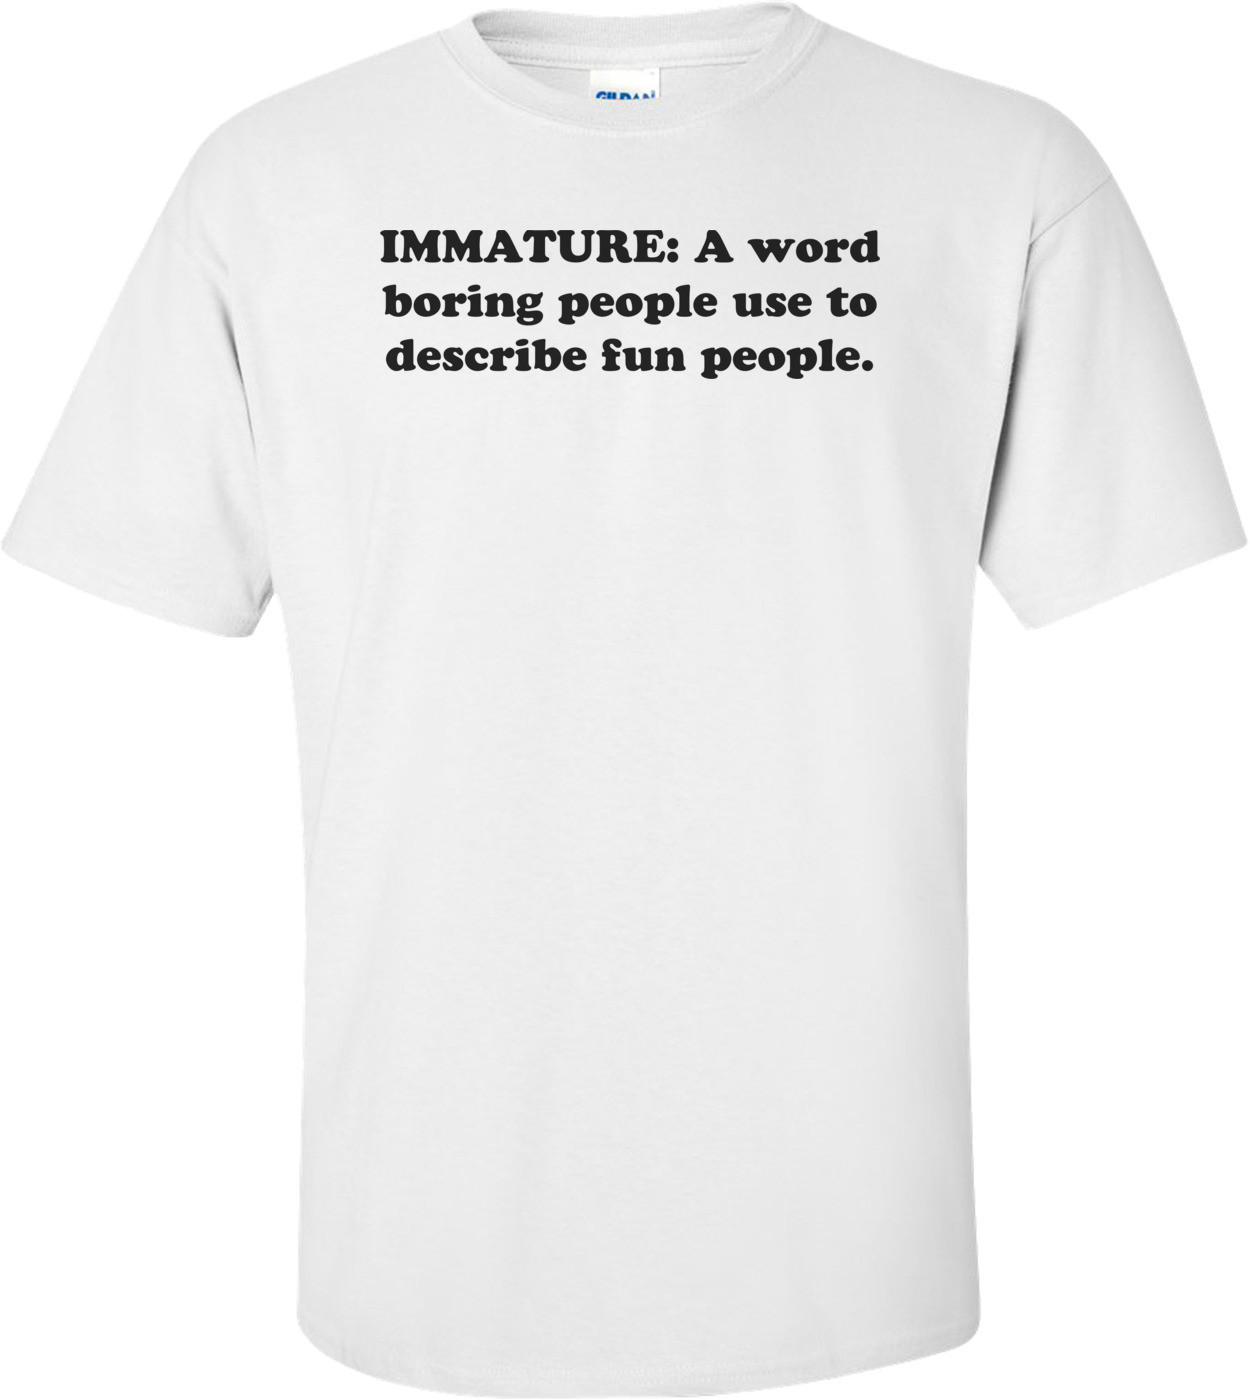 IMMATURE: A word boring people use to describe fun people.